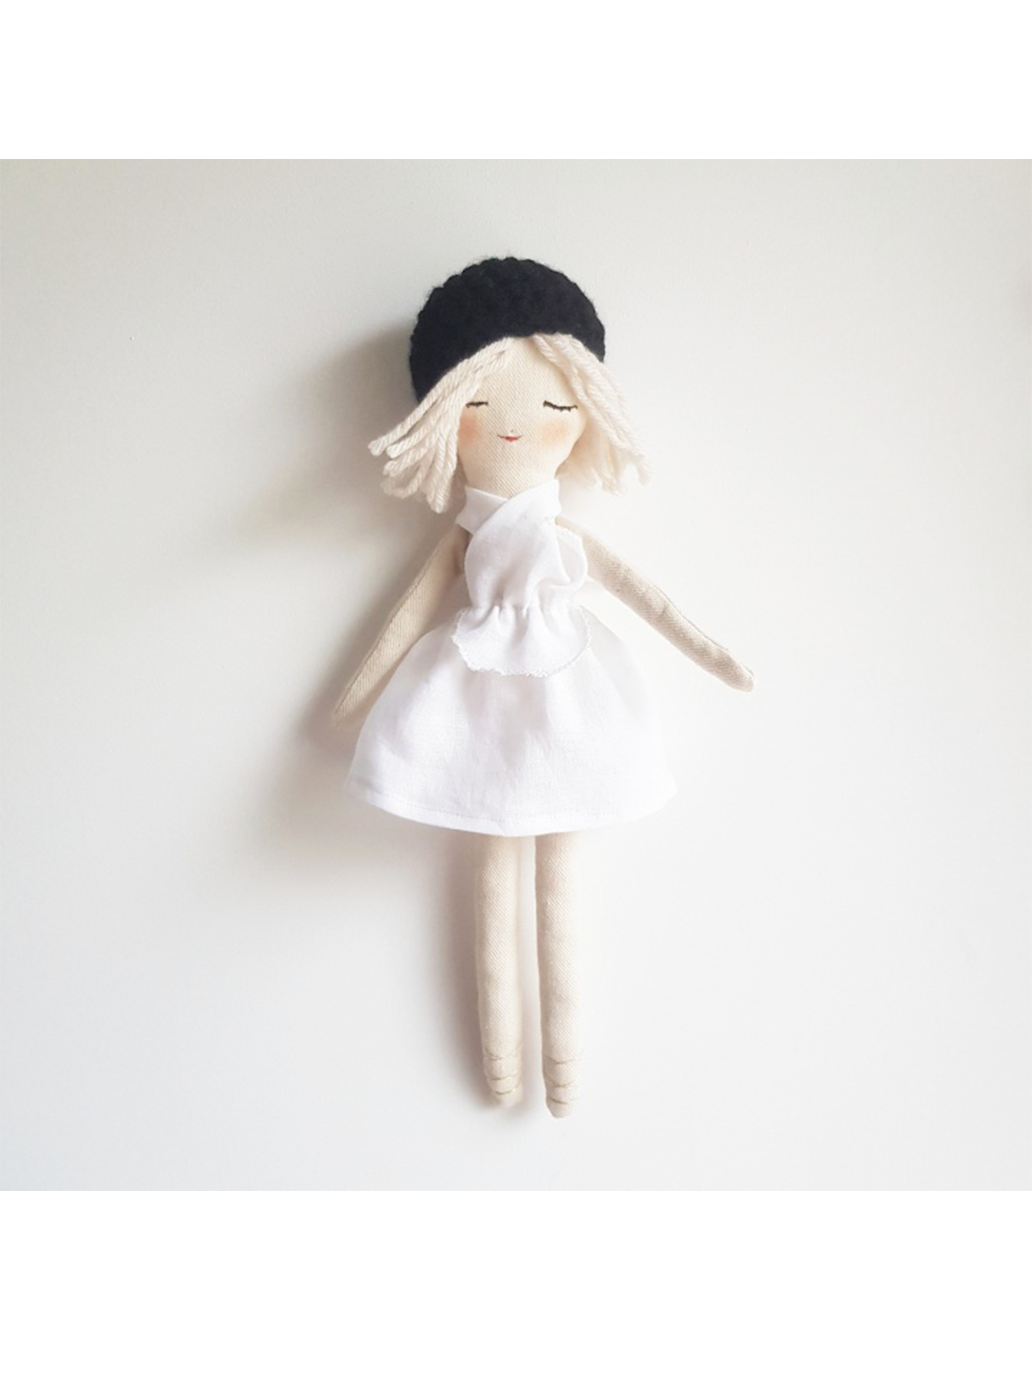 Handmade Parisian doll